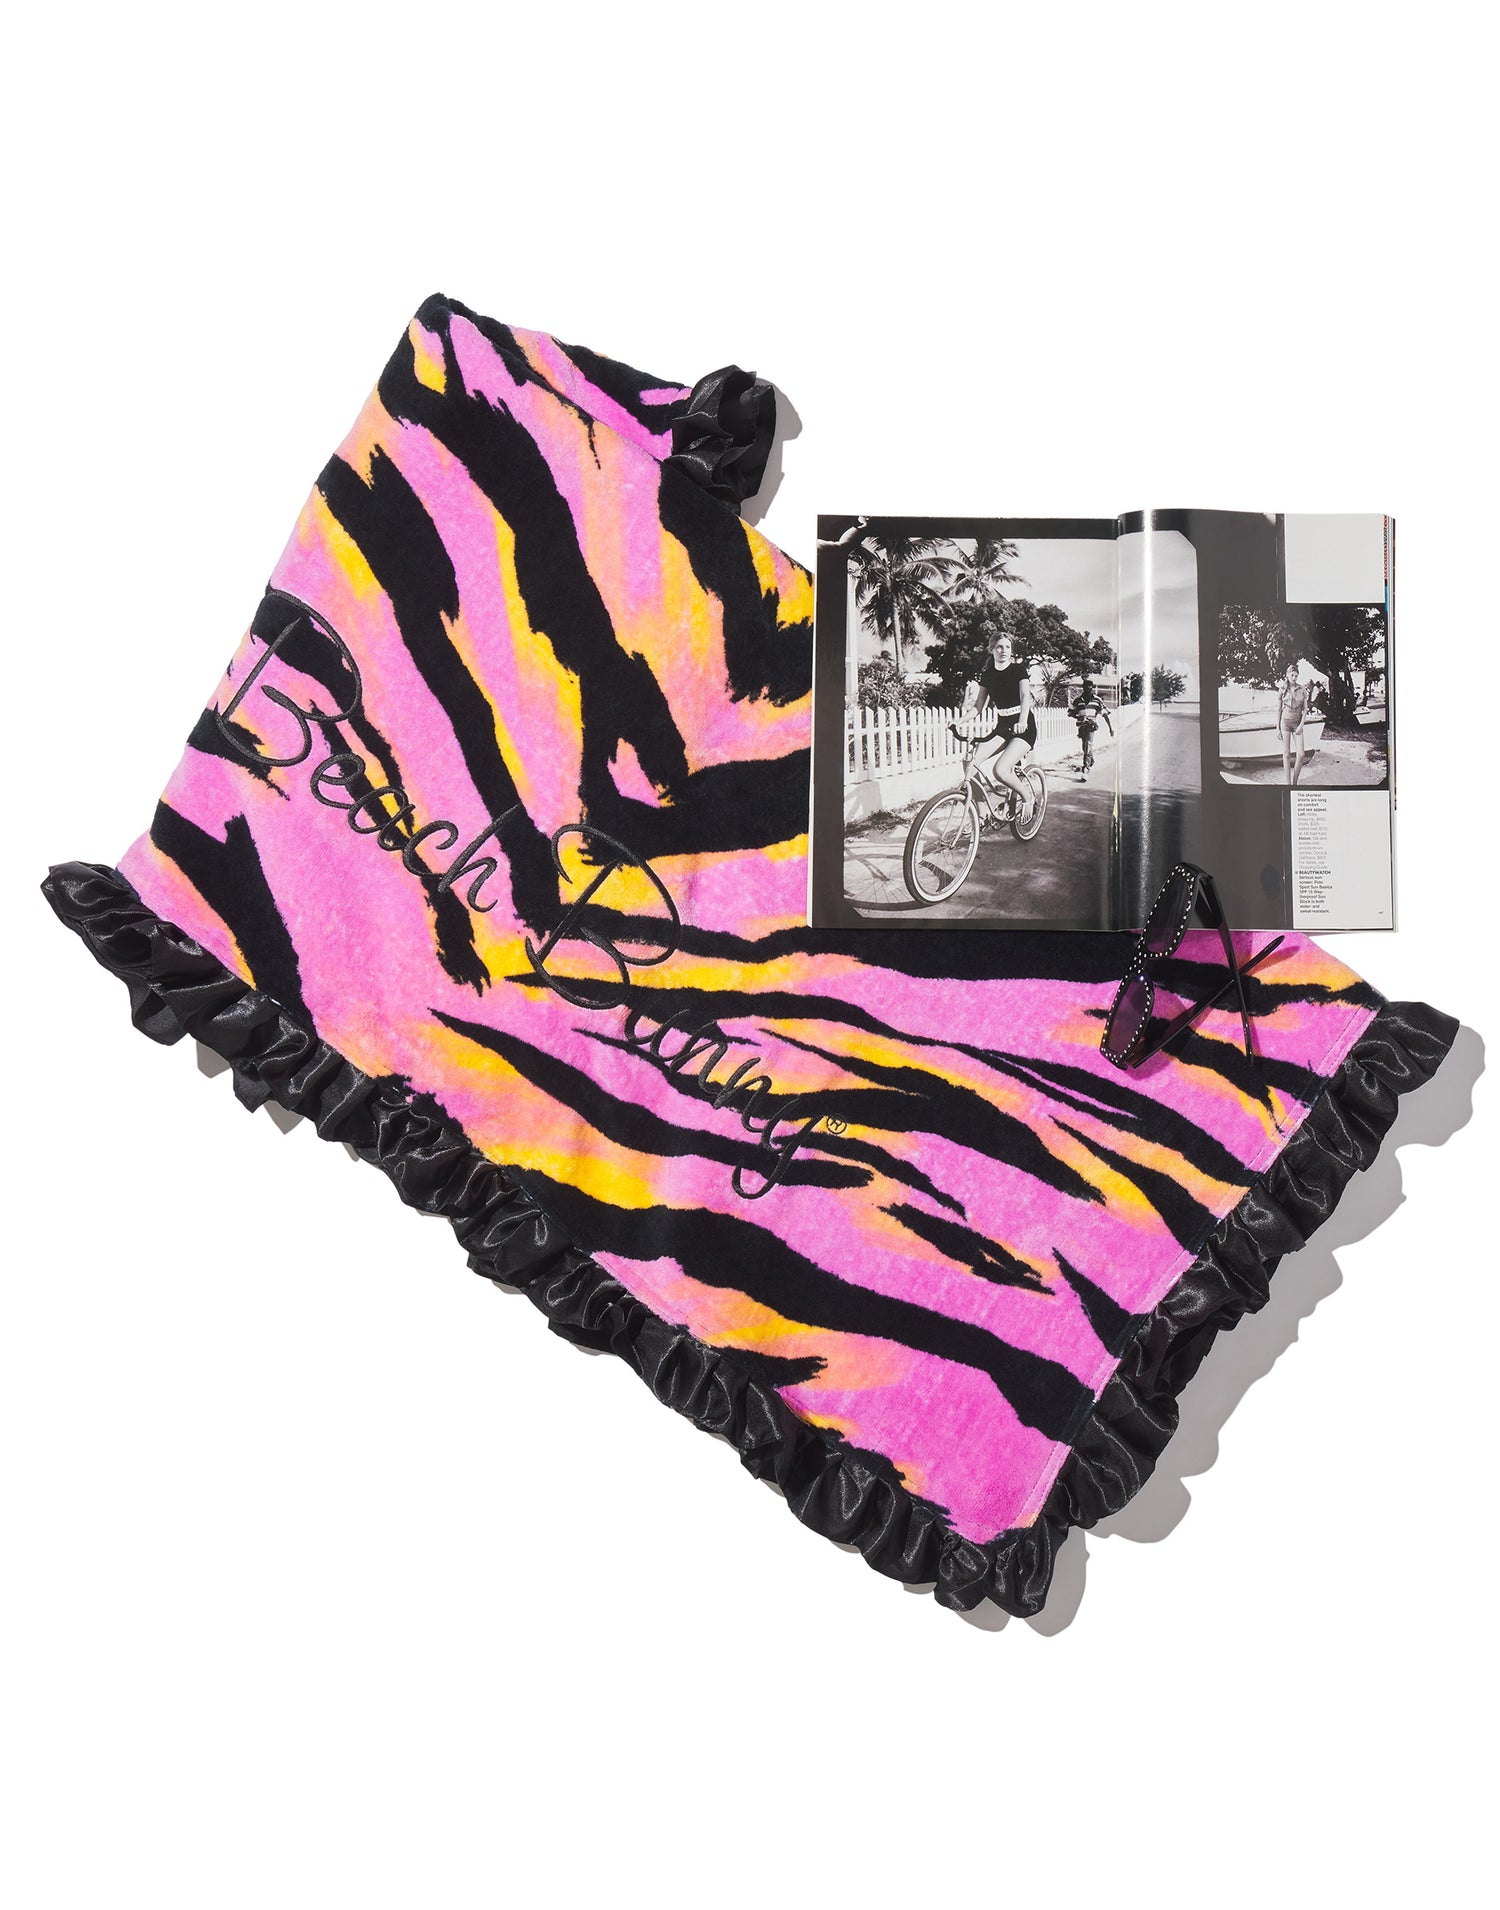 Cabana Animal Beach Towel with Black Ruffle Trim - Alternate Product View